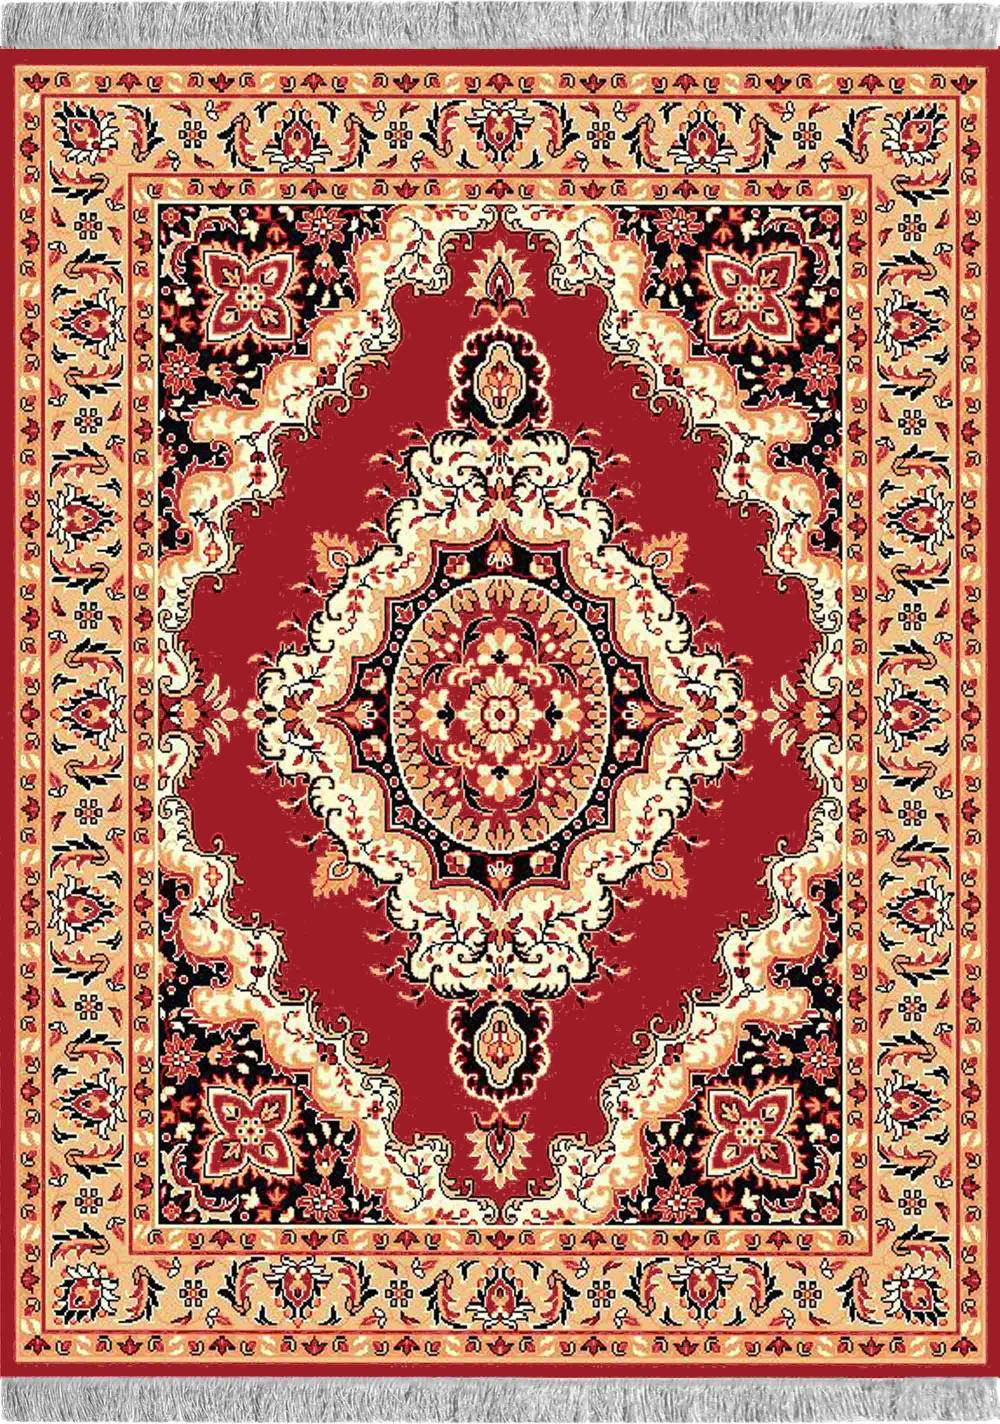 Detec™ Presto Hand Tufted Traditional Patterned Carpet 